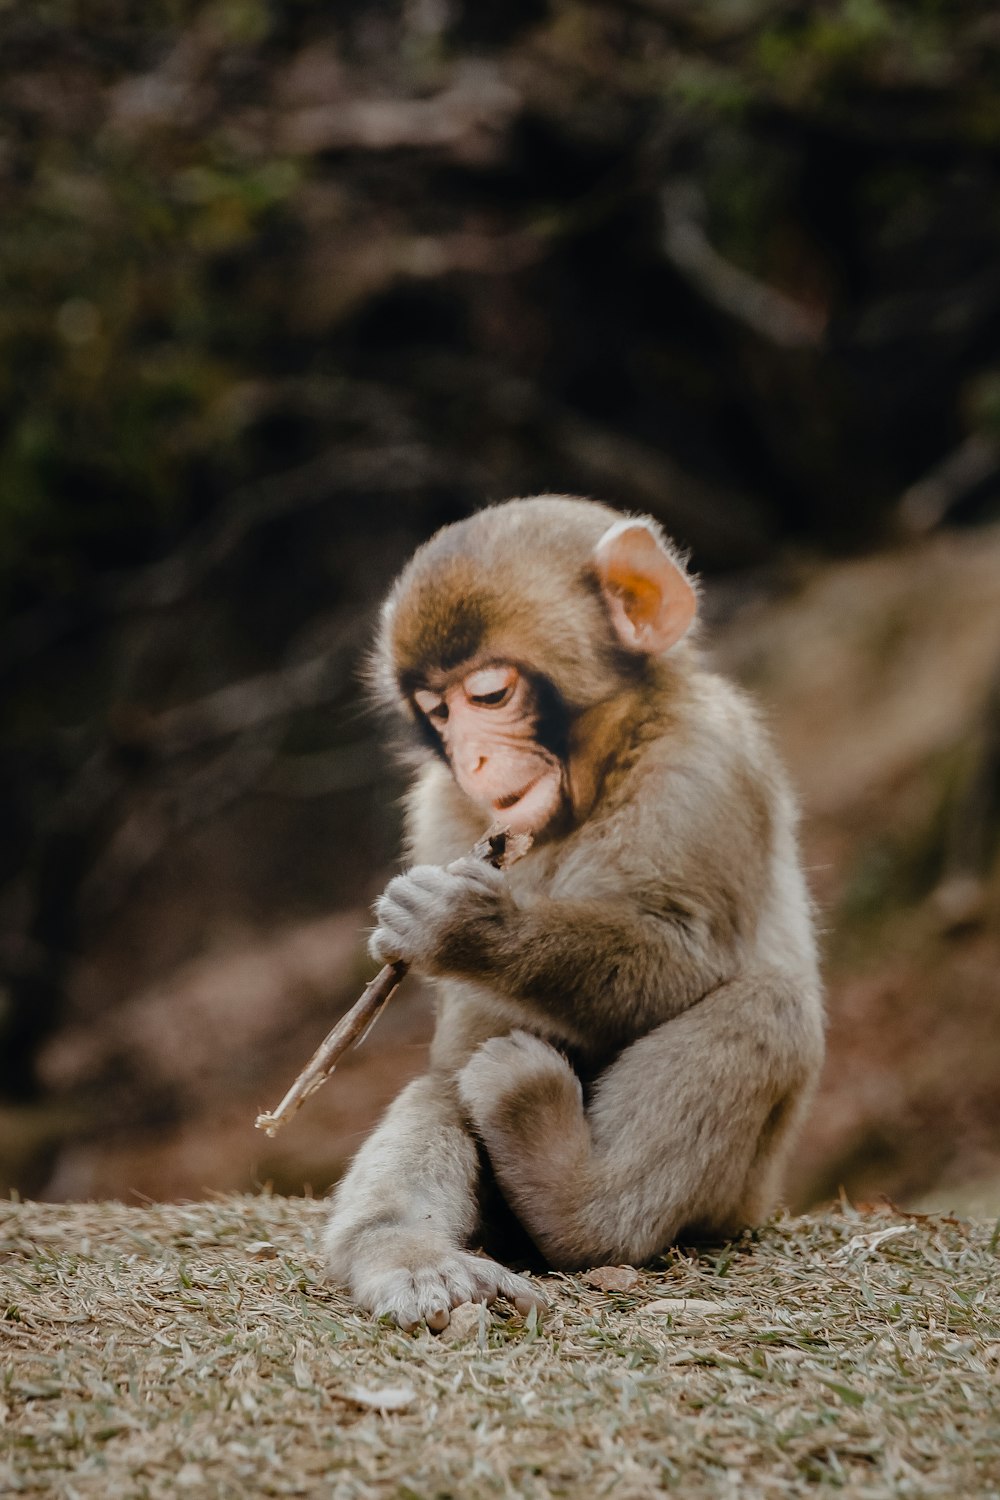 gray monkey playing instrument at daytime